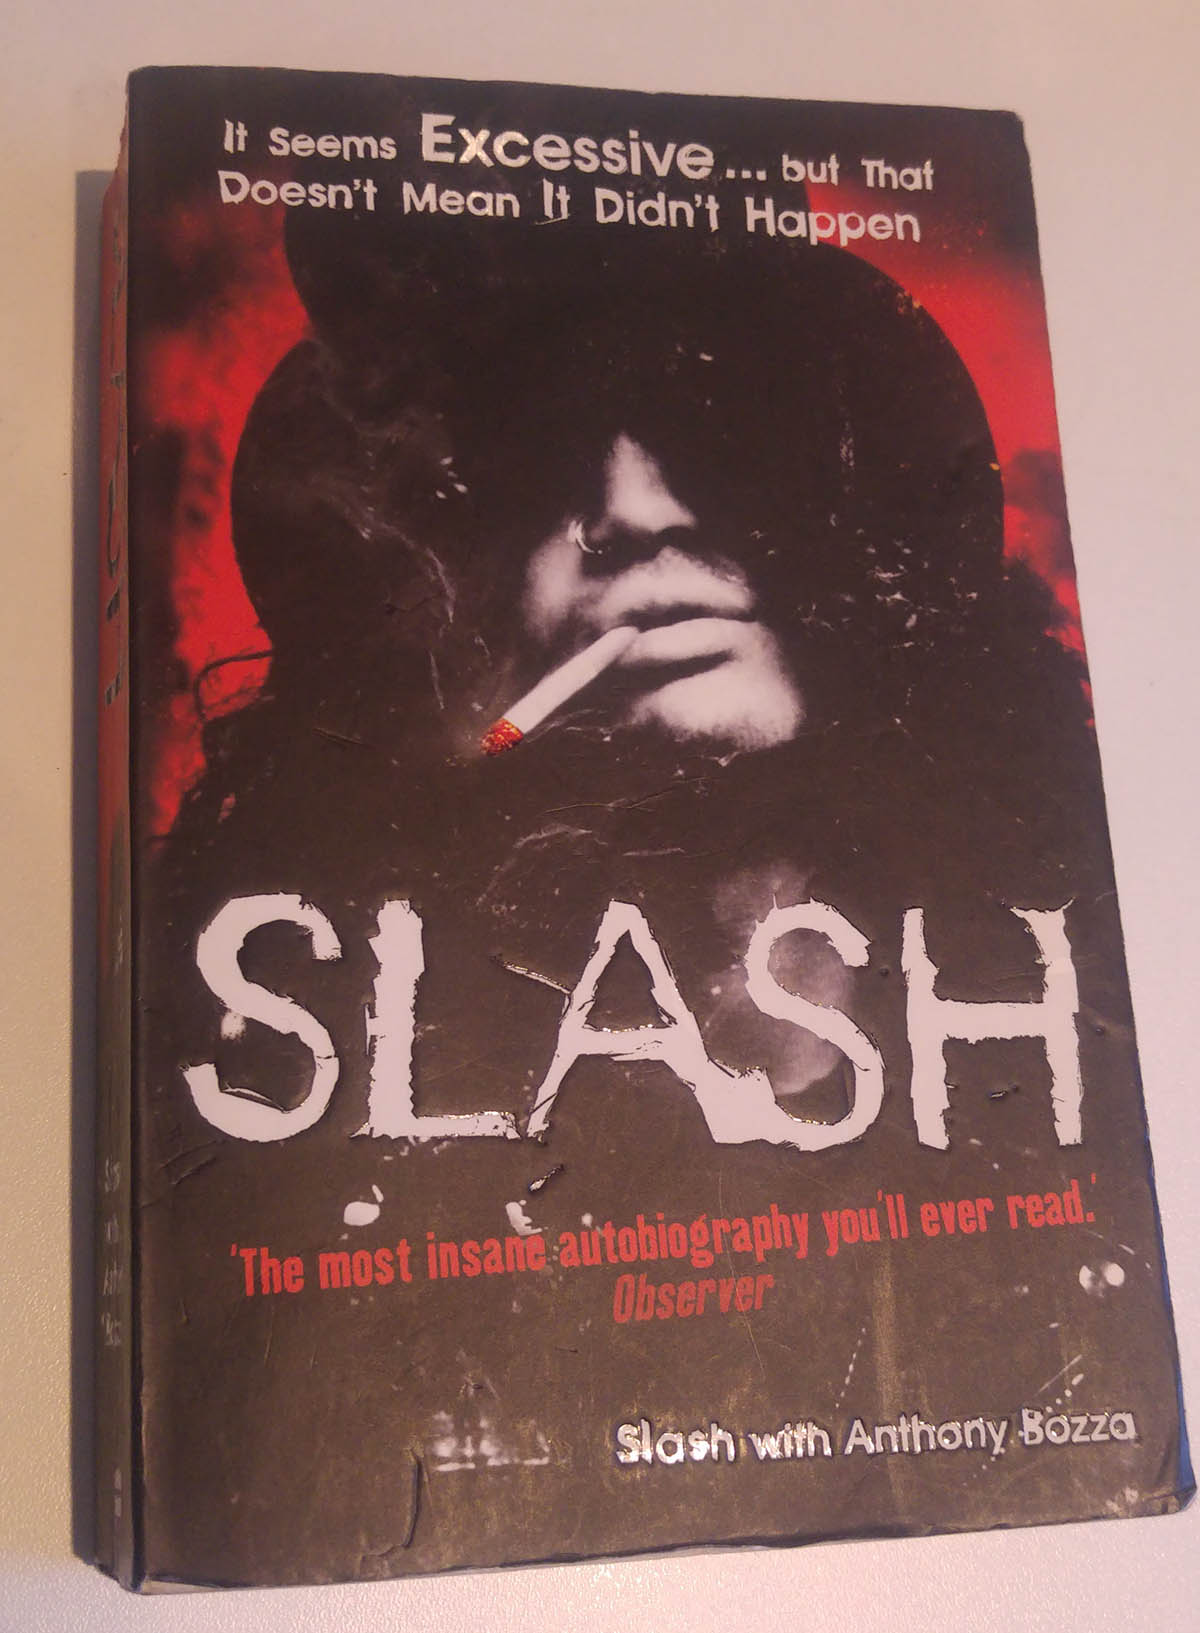 Slash's book